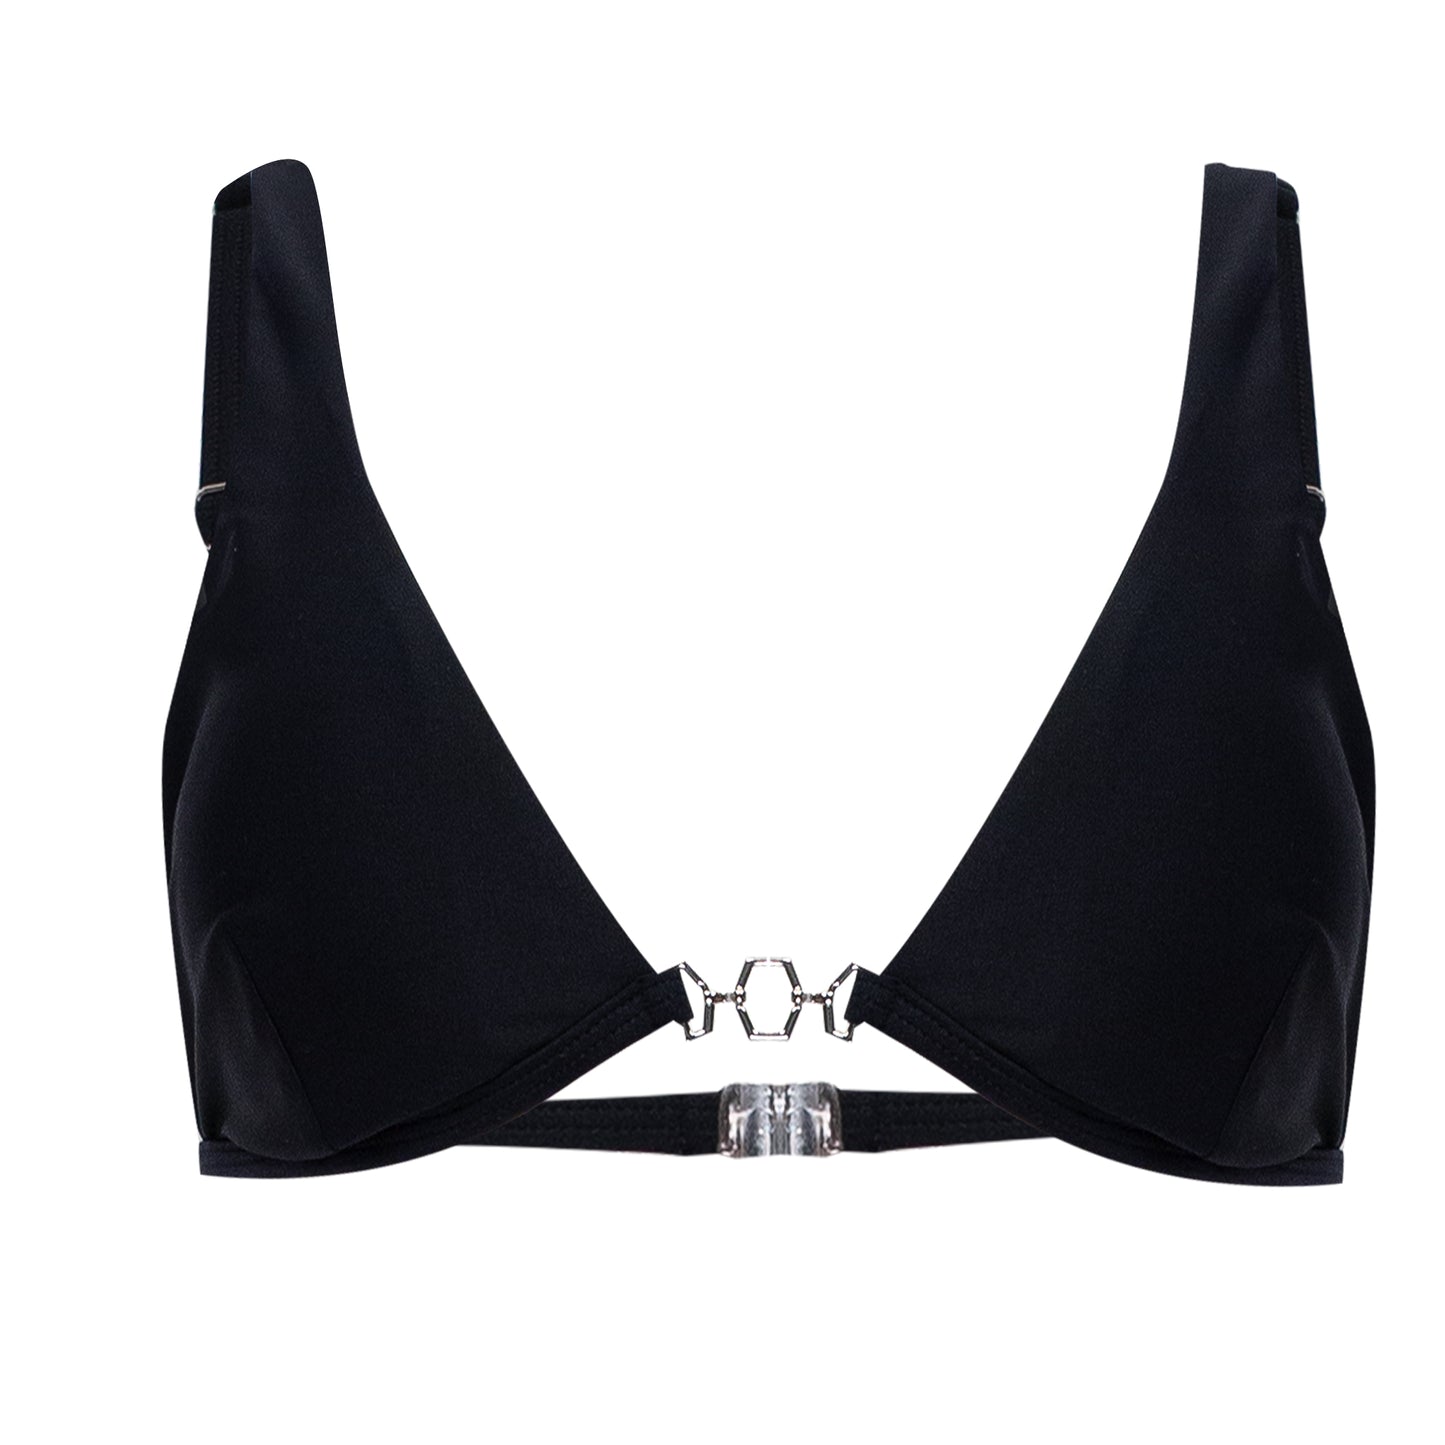 Ava Bikini Top With Trim Black